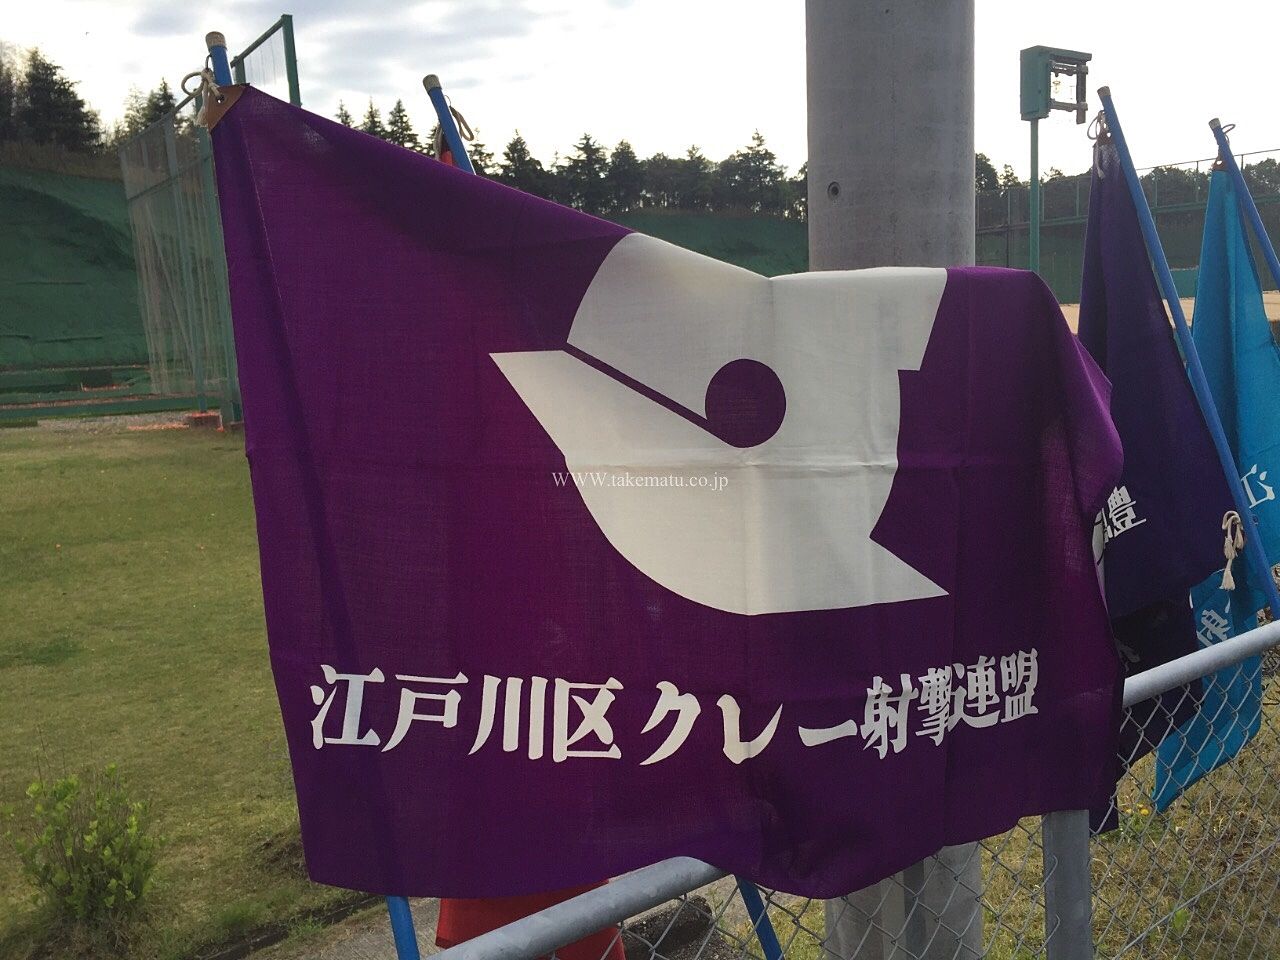 江戸川区クレー射撃連盟旗